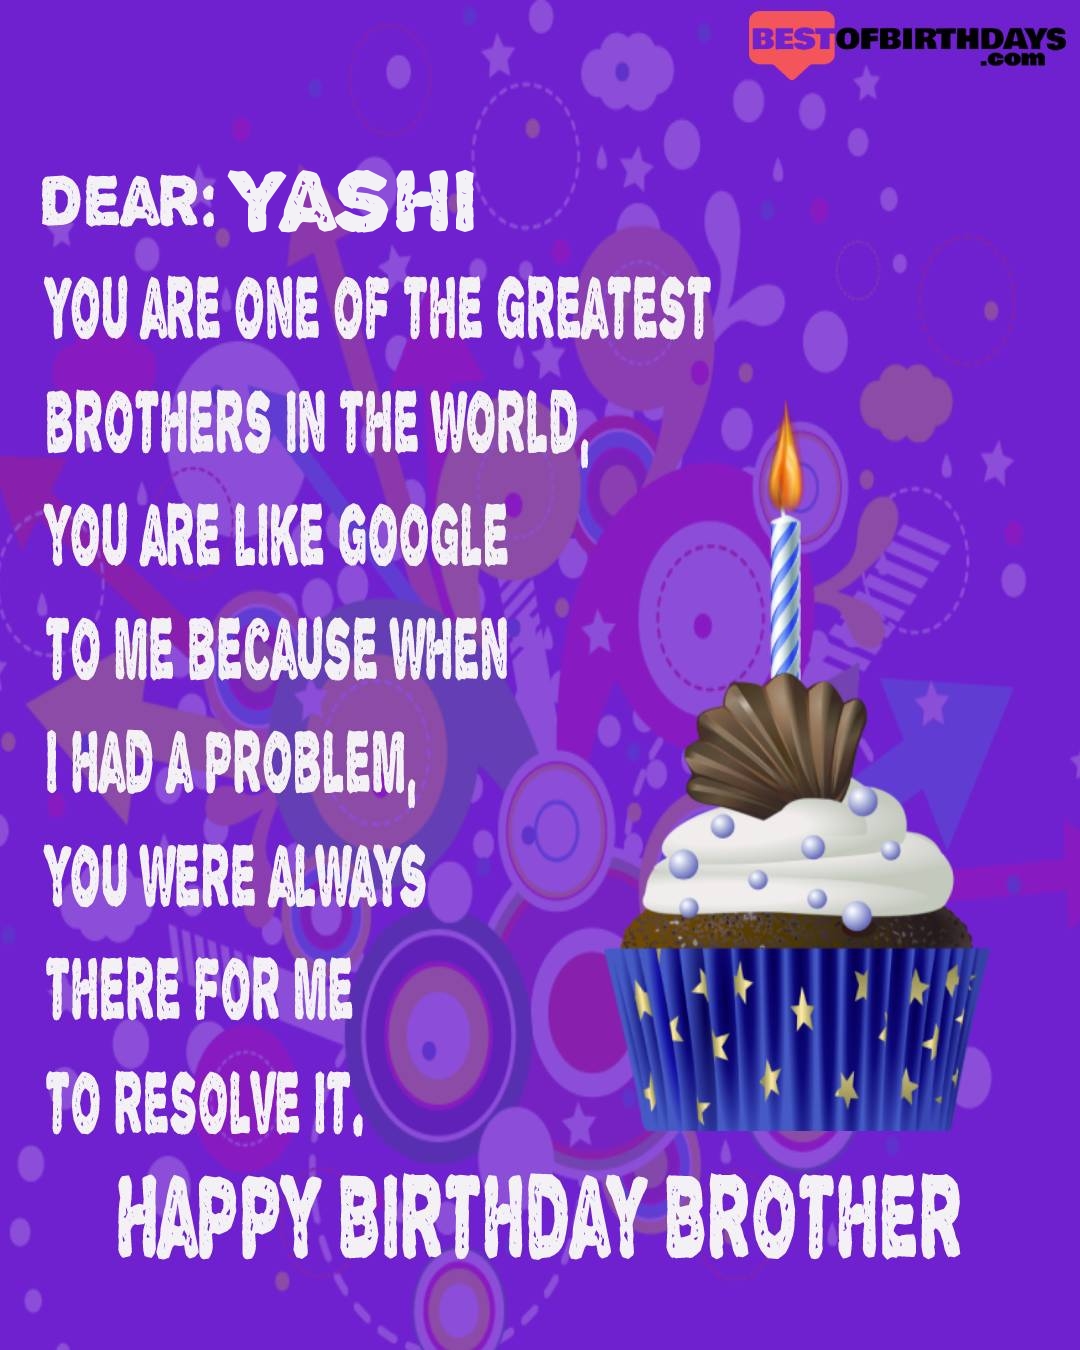 Happy birthday yashi bhai brother bro